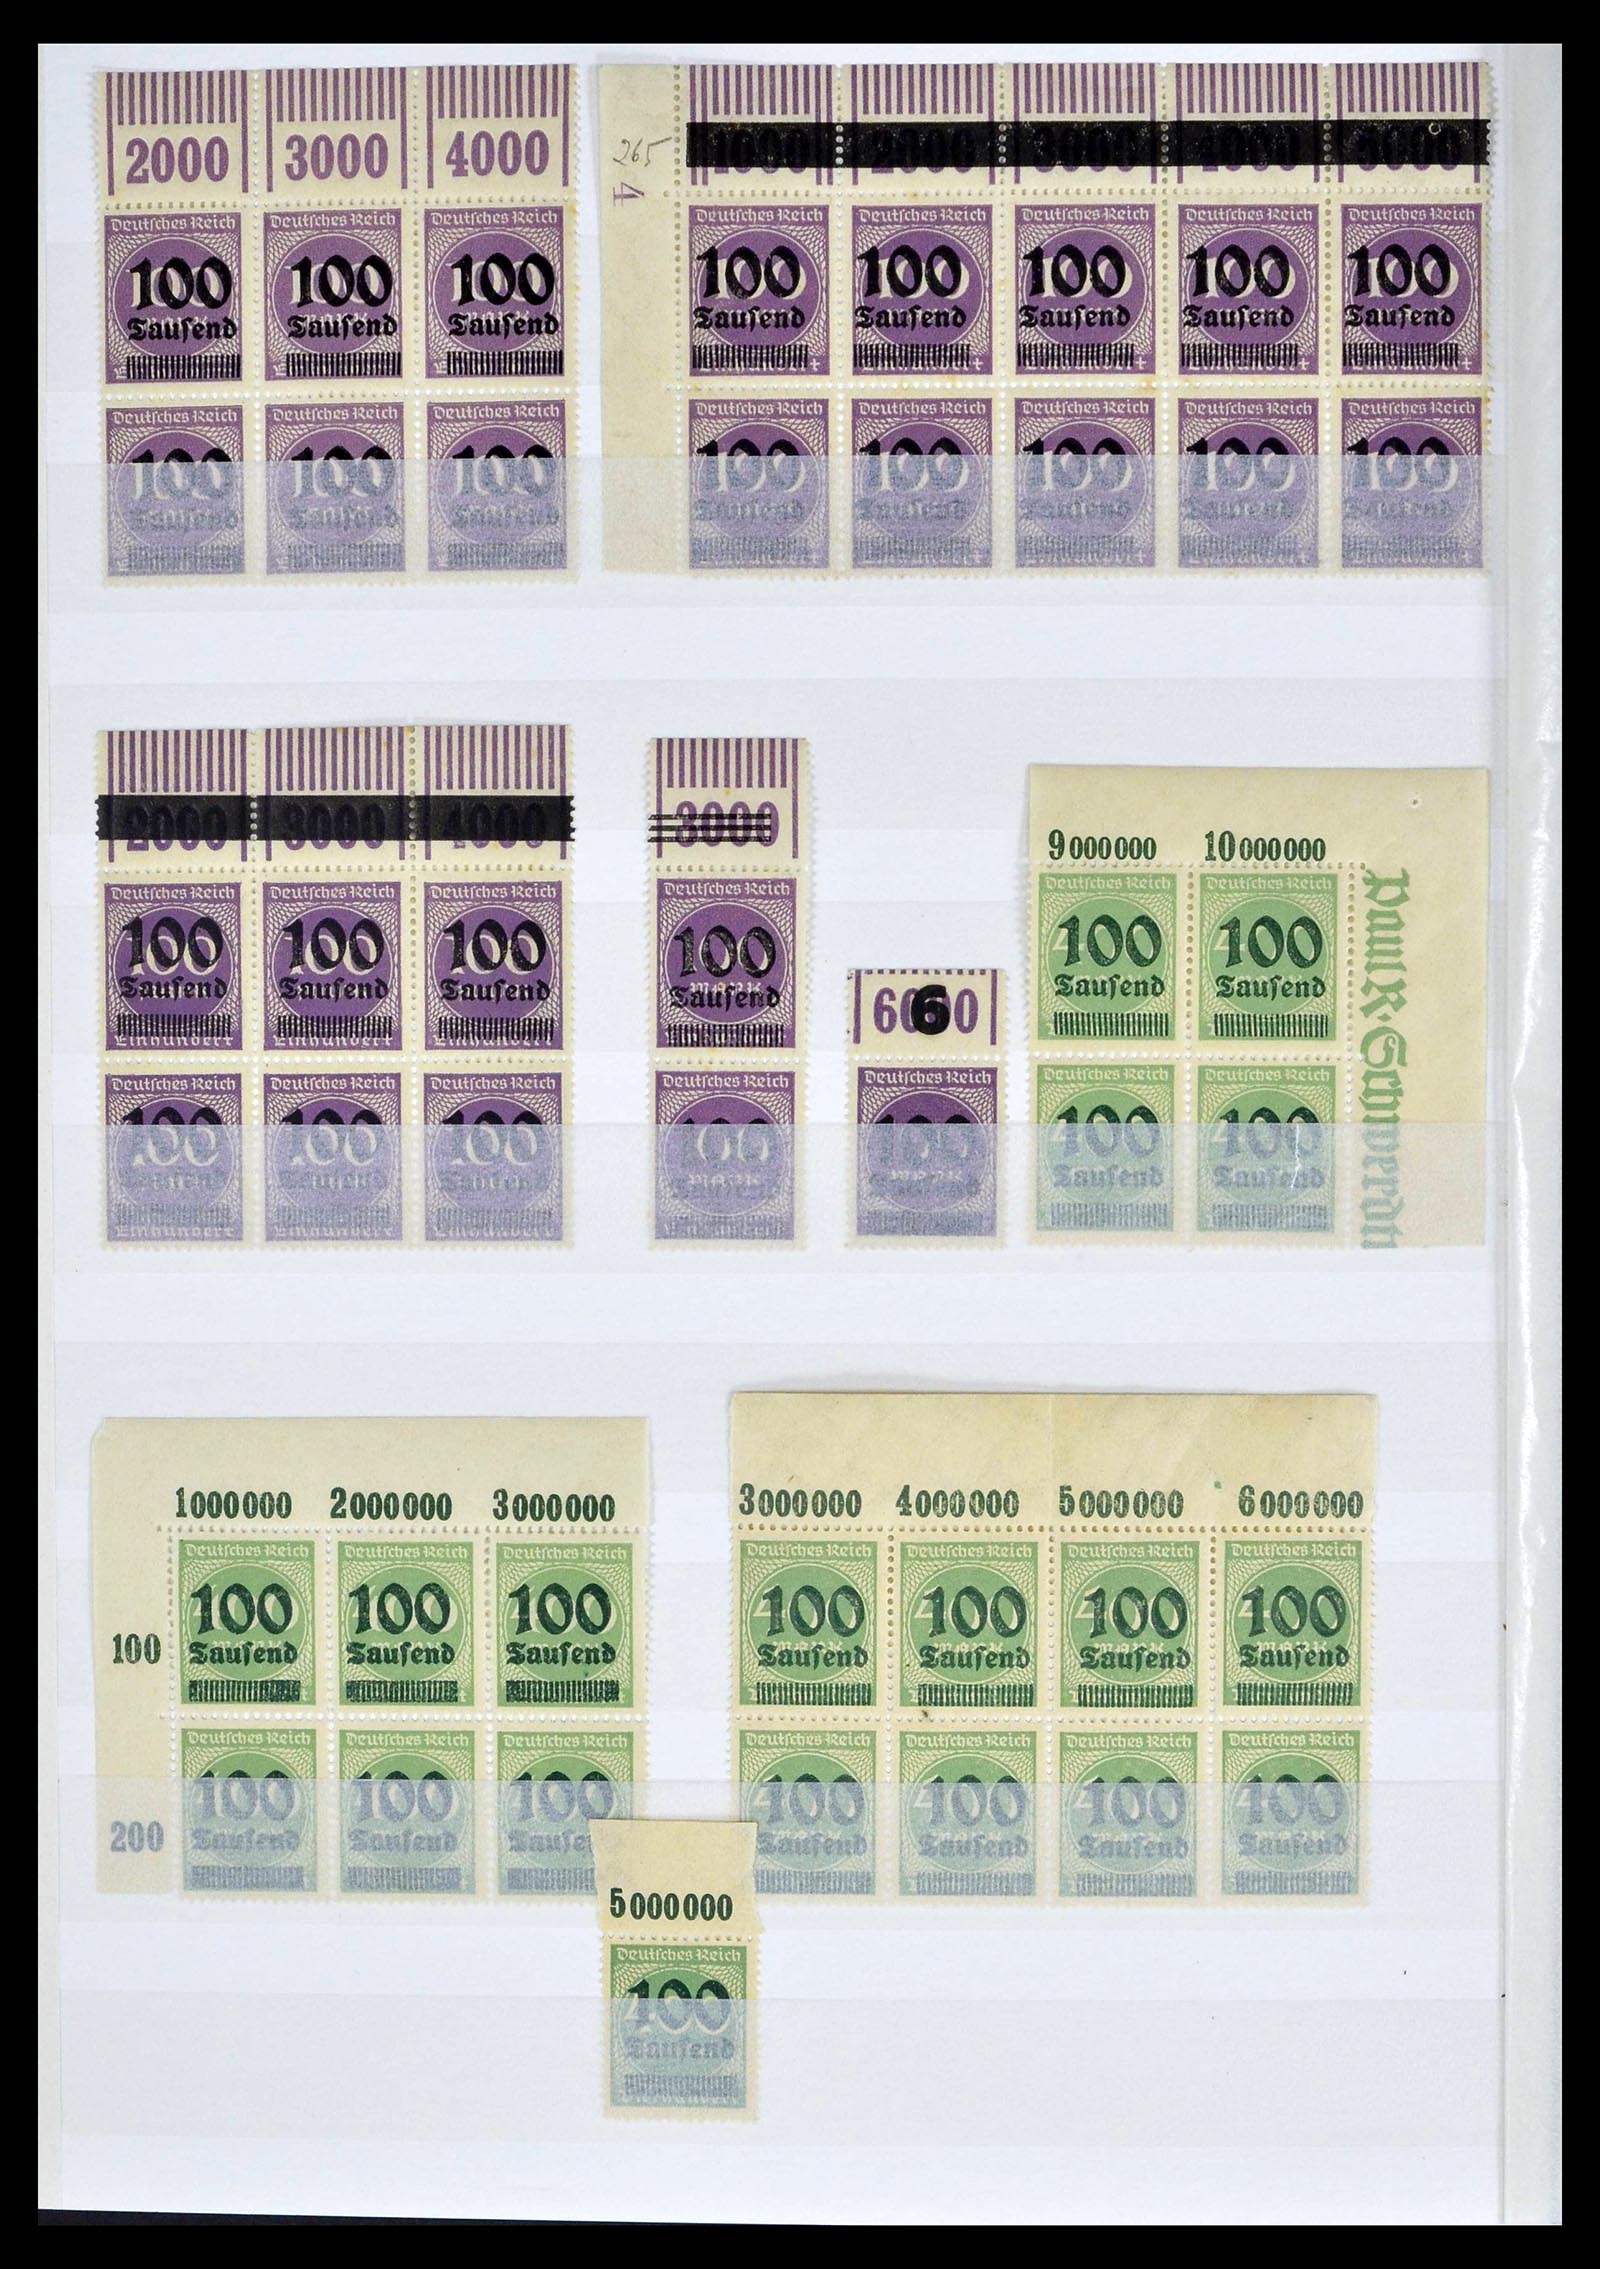 39254 0048 - Stamp collection 39254 German Reich MNH top margins.